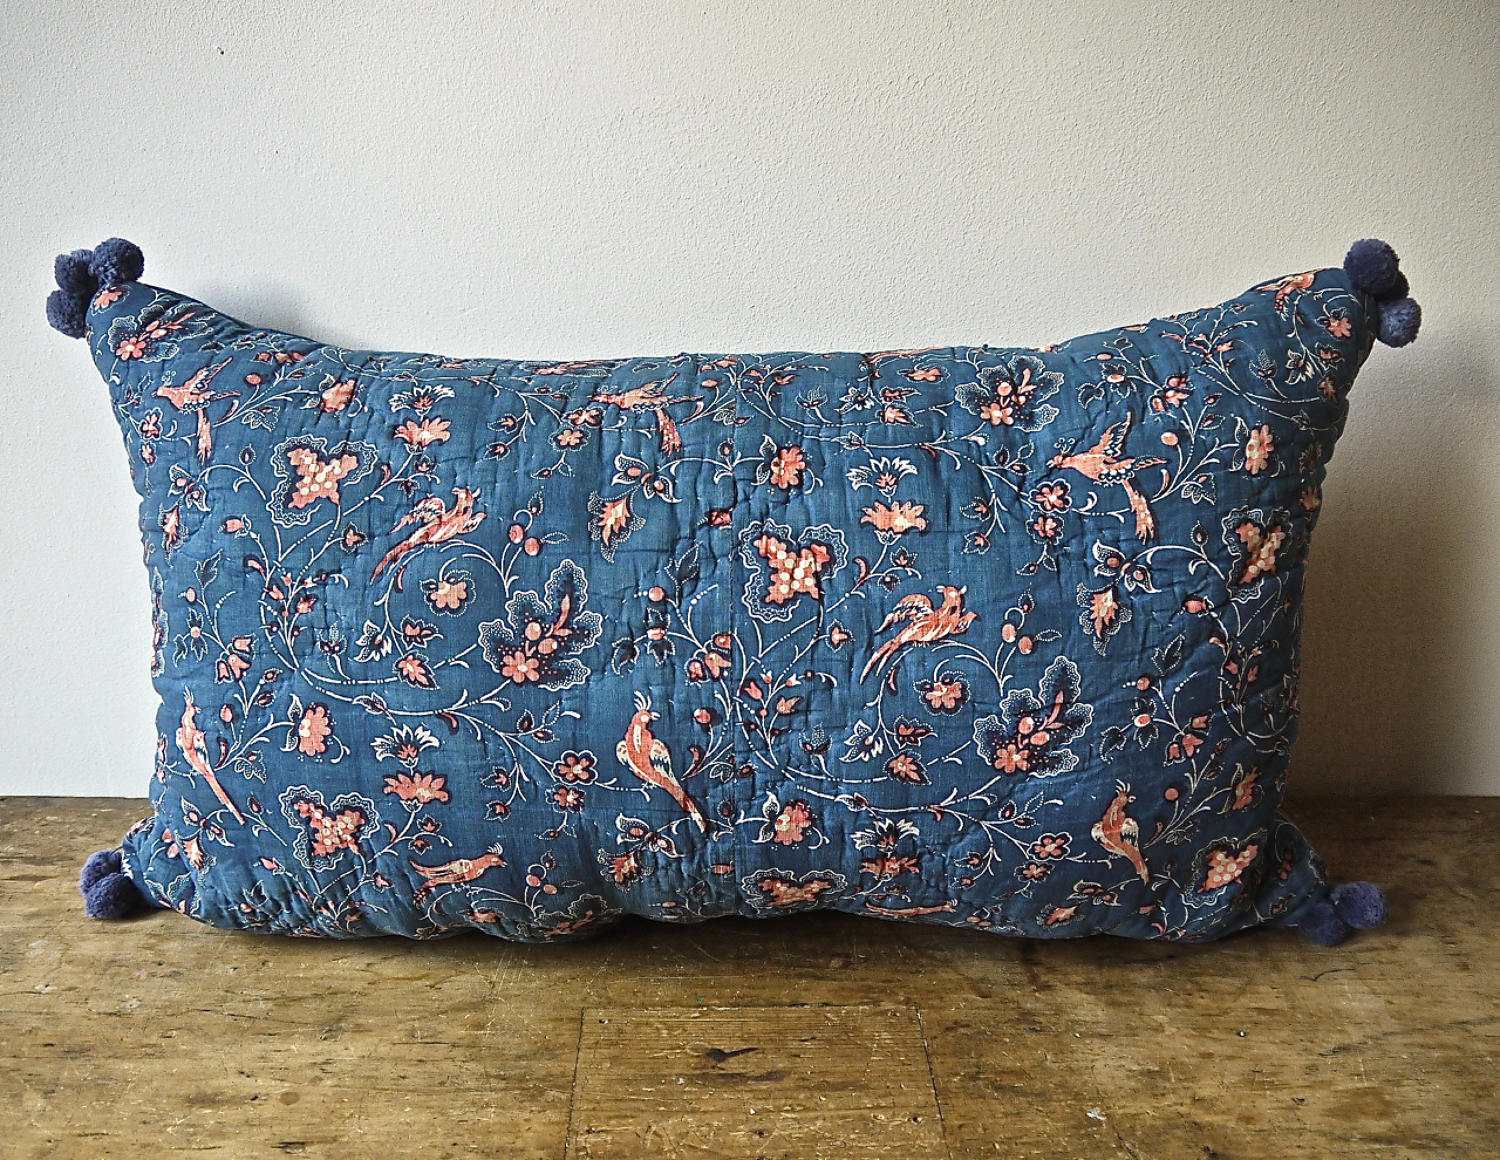 Early 19th century French blockprinted indigo cushion